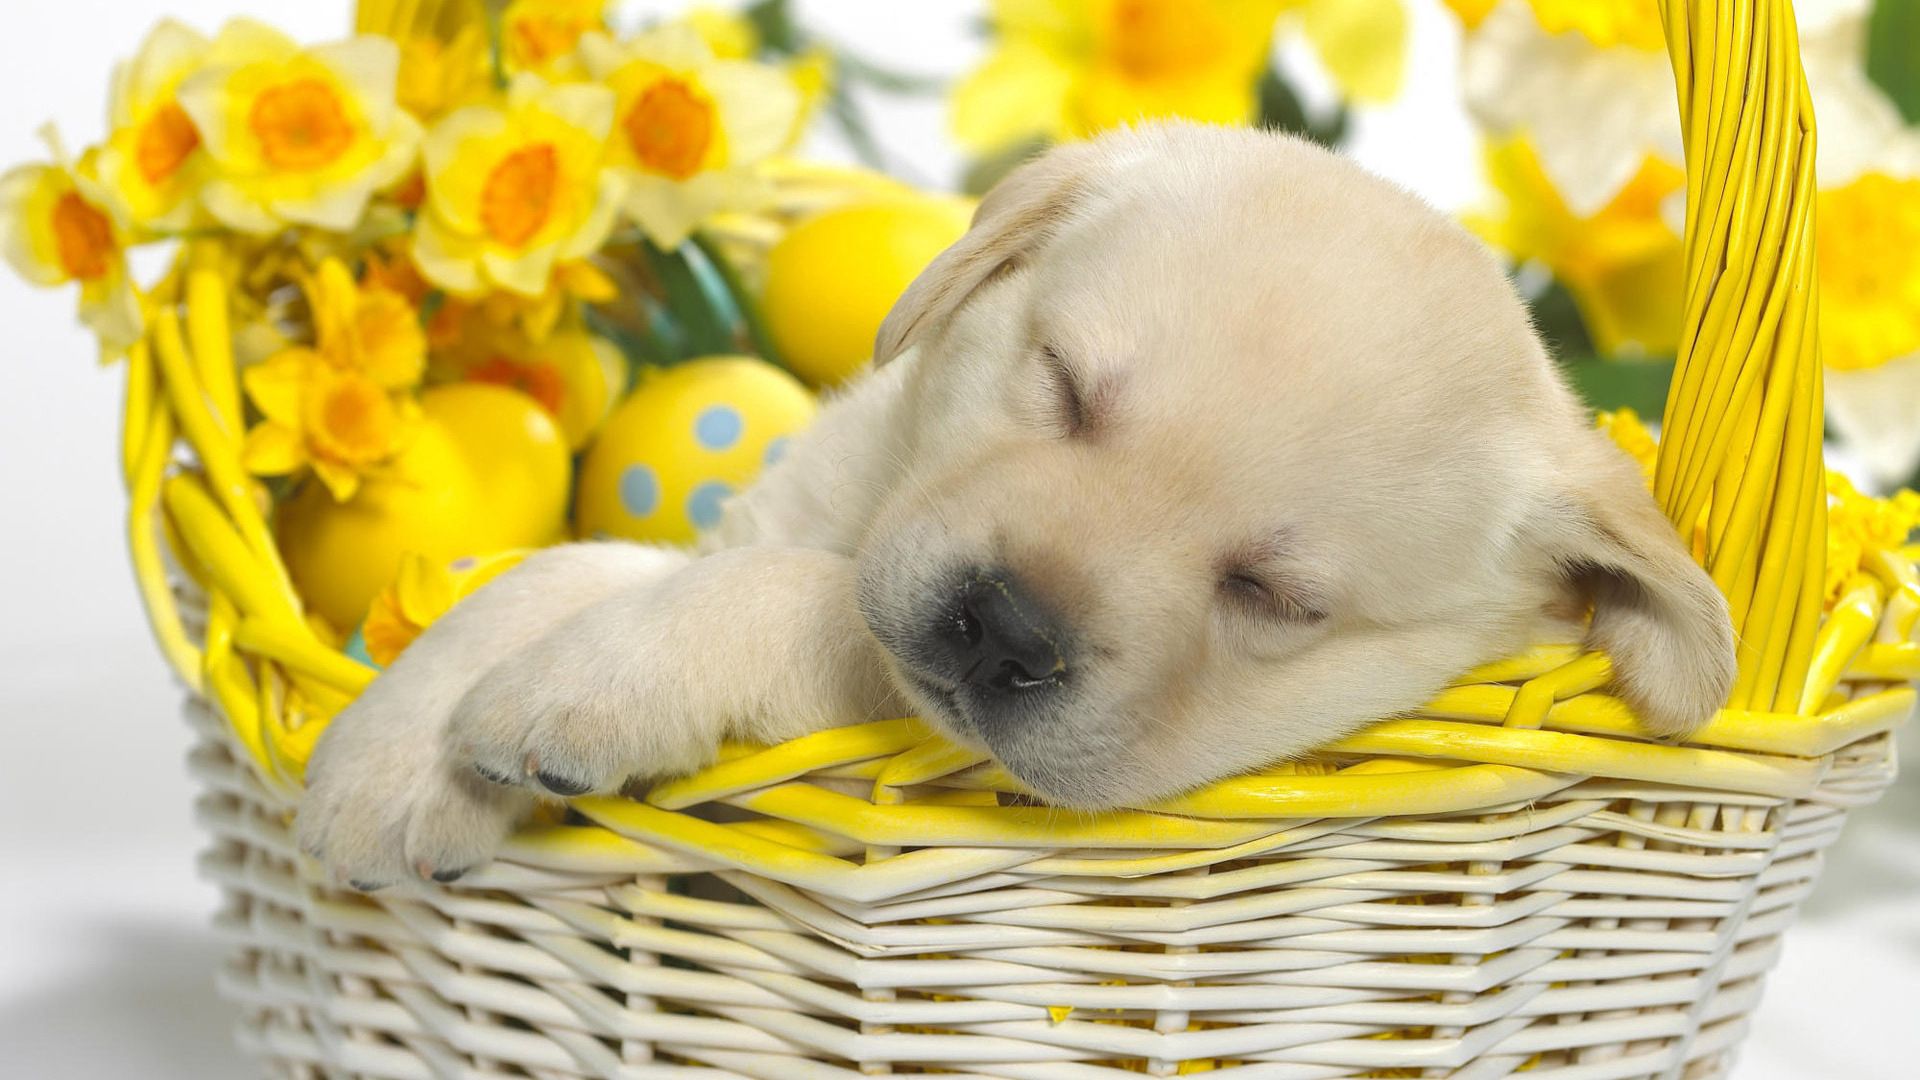 labrador, animals, flowers, eggs, easter, puppy, sleep, dream, basket Full HD